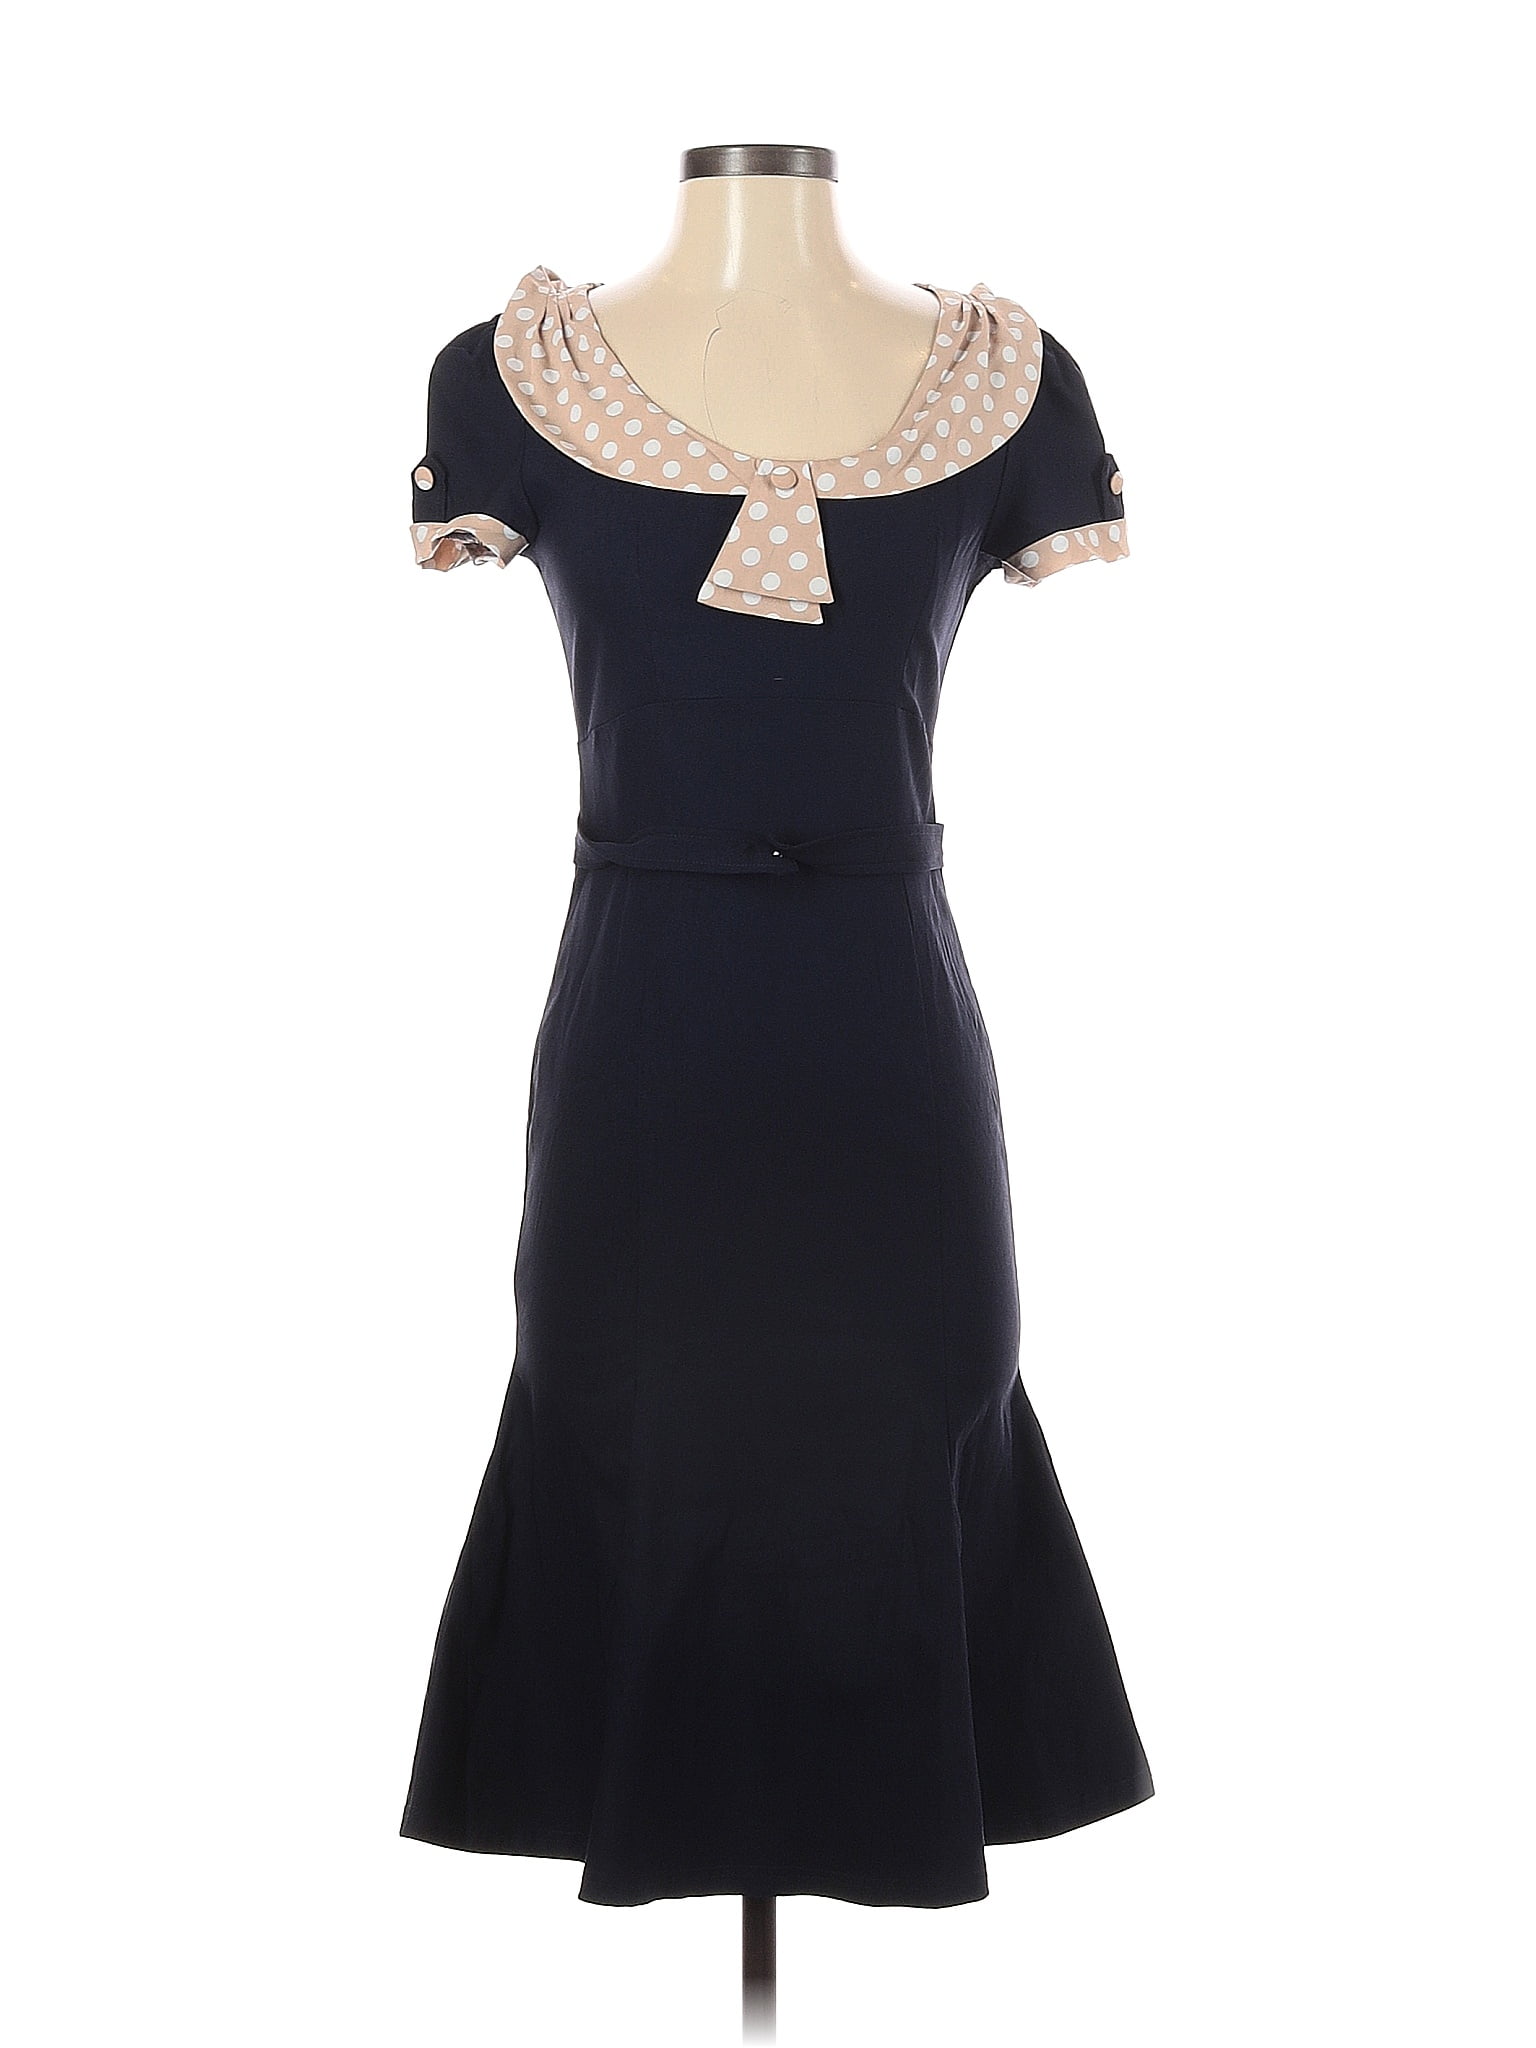 Miusol Blue Cocktail Dress Size S - 50% off | thredUP